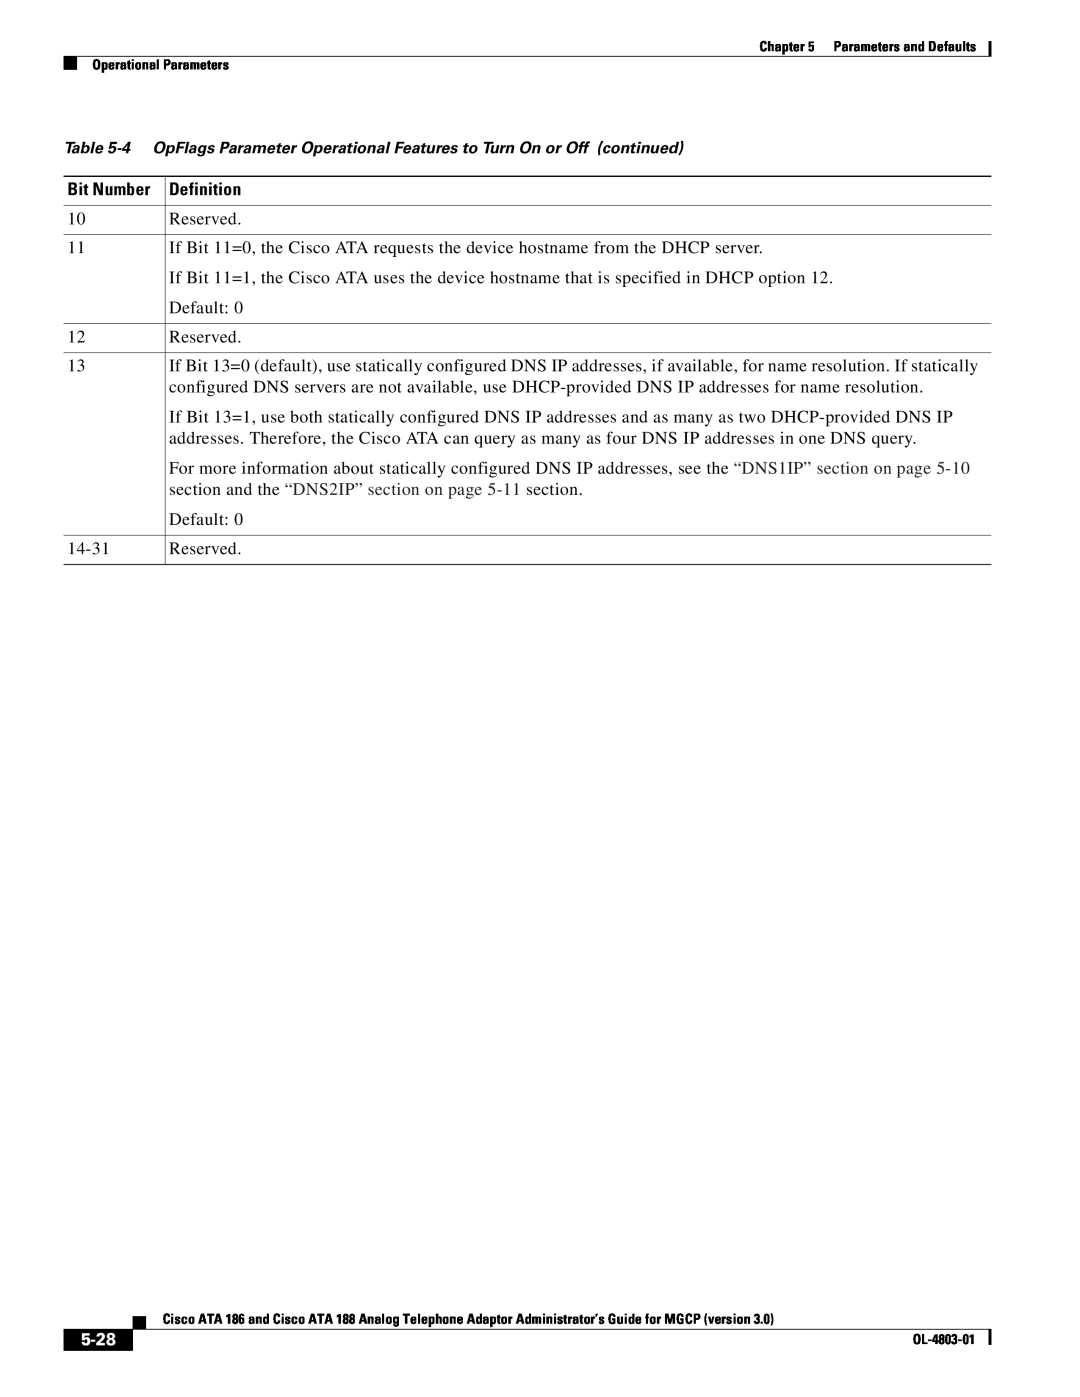 Cisco Systems ATA 186, ATA 188 manual 5-28, Bit Number Definition 